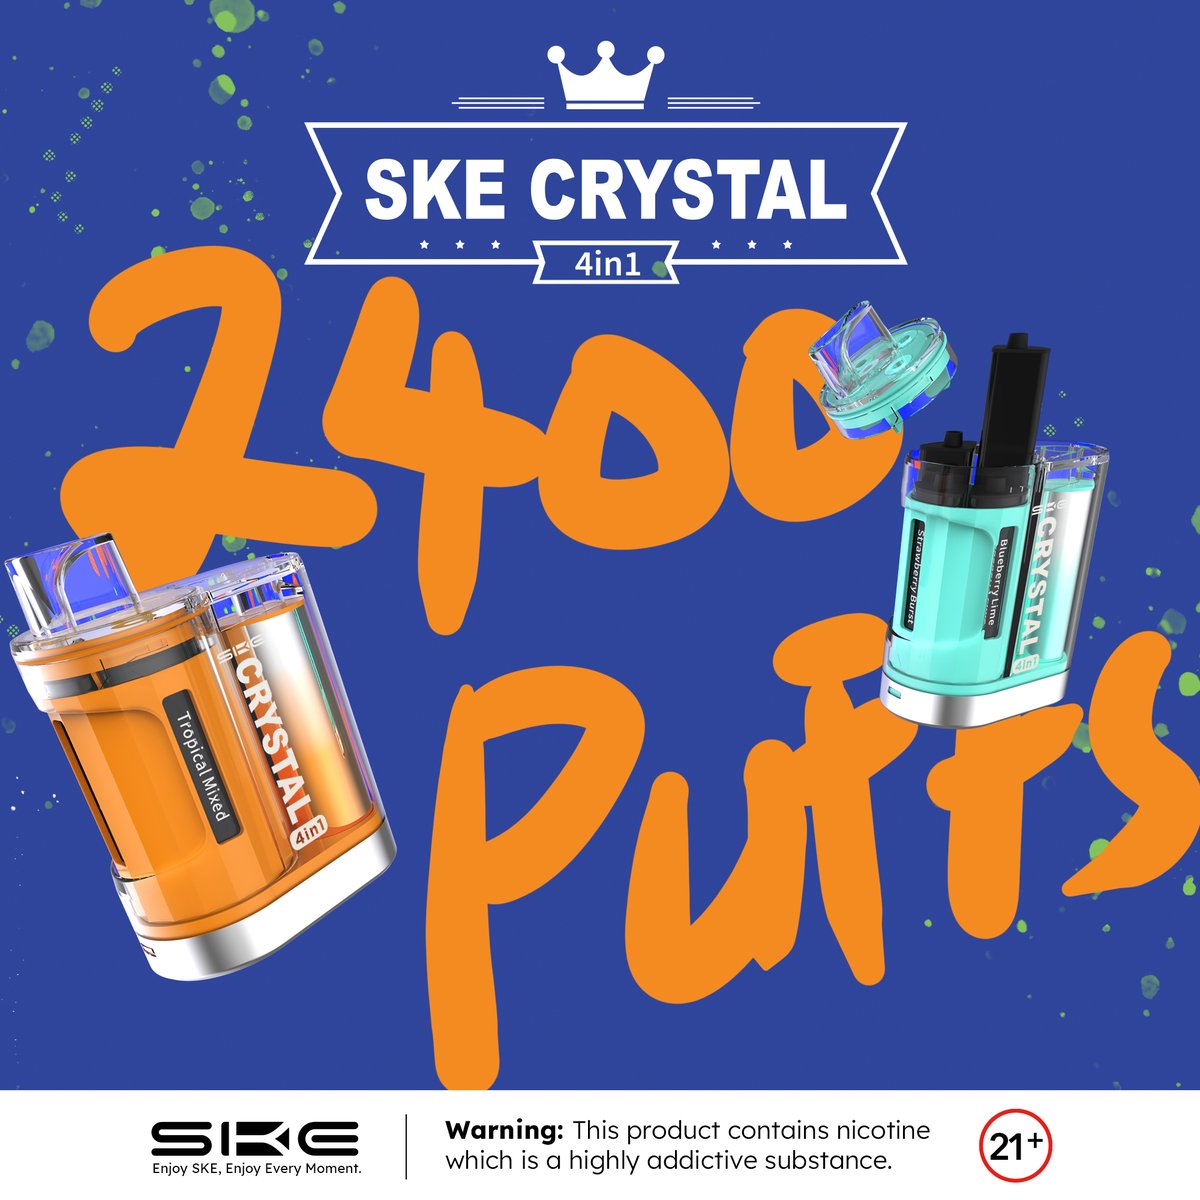 Unlock 2400 puffs of pure satisfaction with #skecrystal4in1! ✨

#skevape #ske #vapelove #vapefam #vapefamily #vapefams #vapedaily #skecrystal